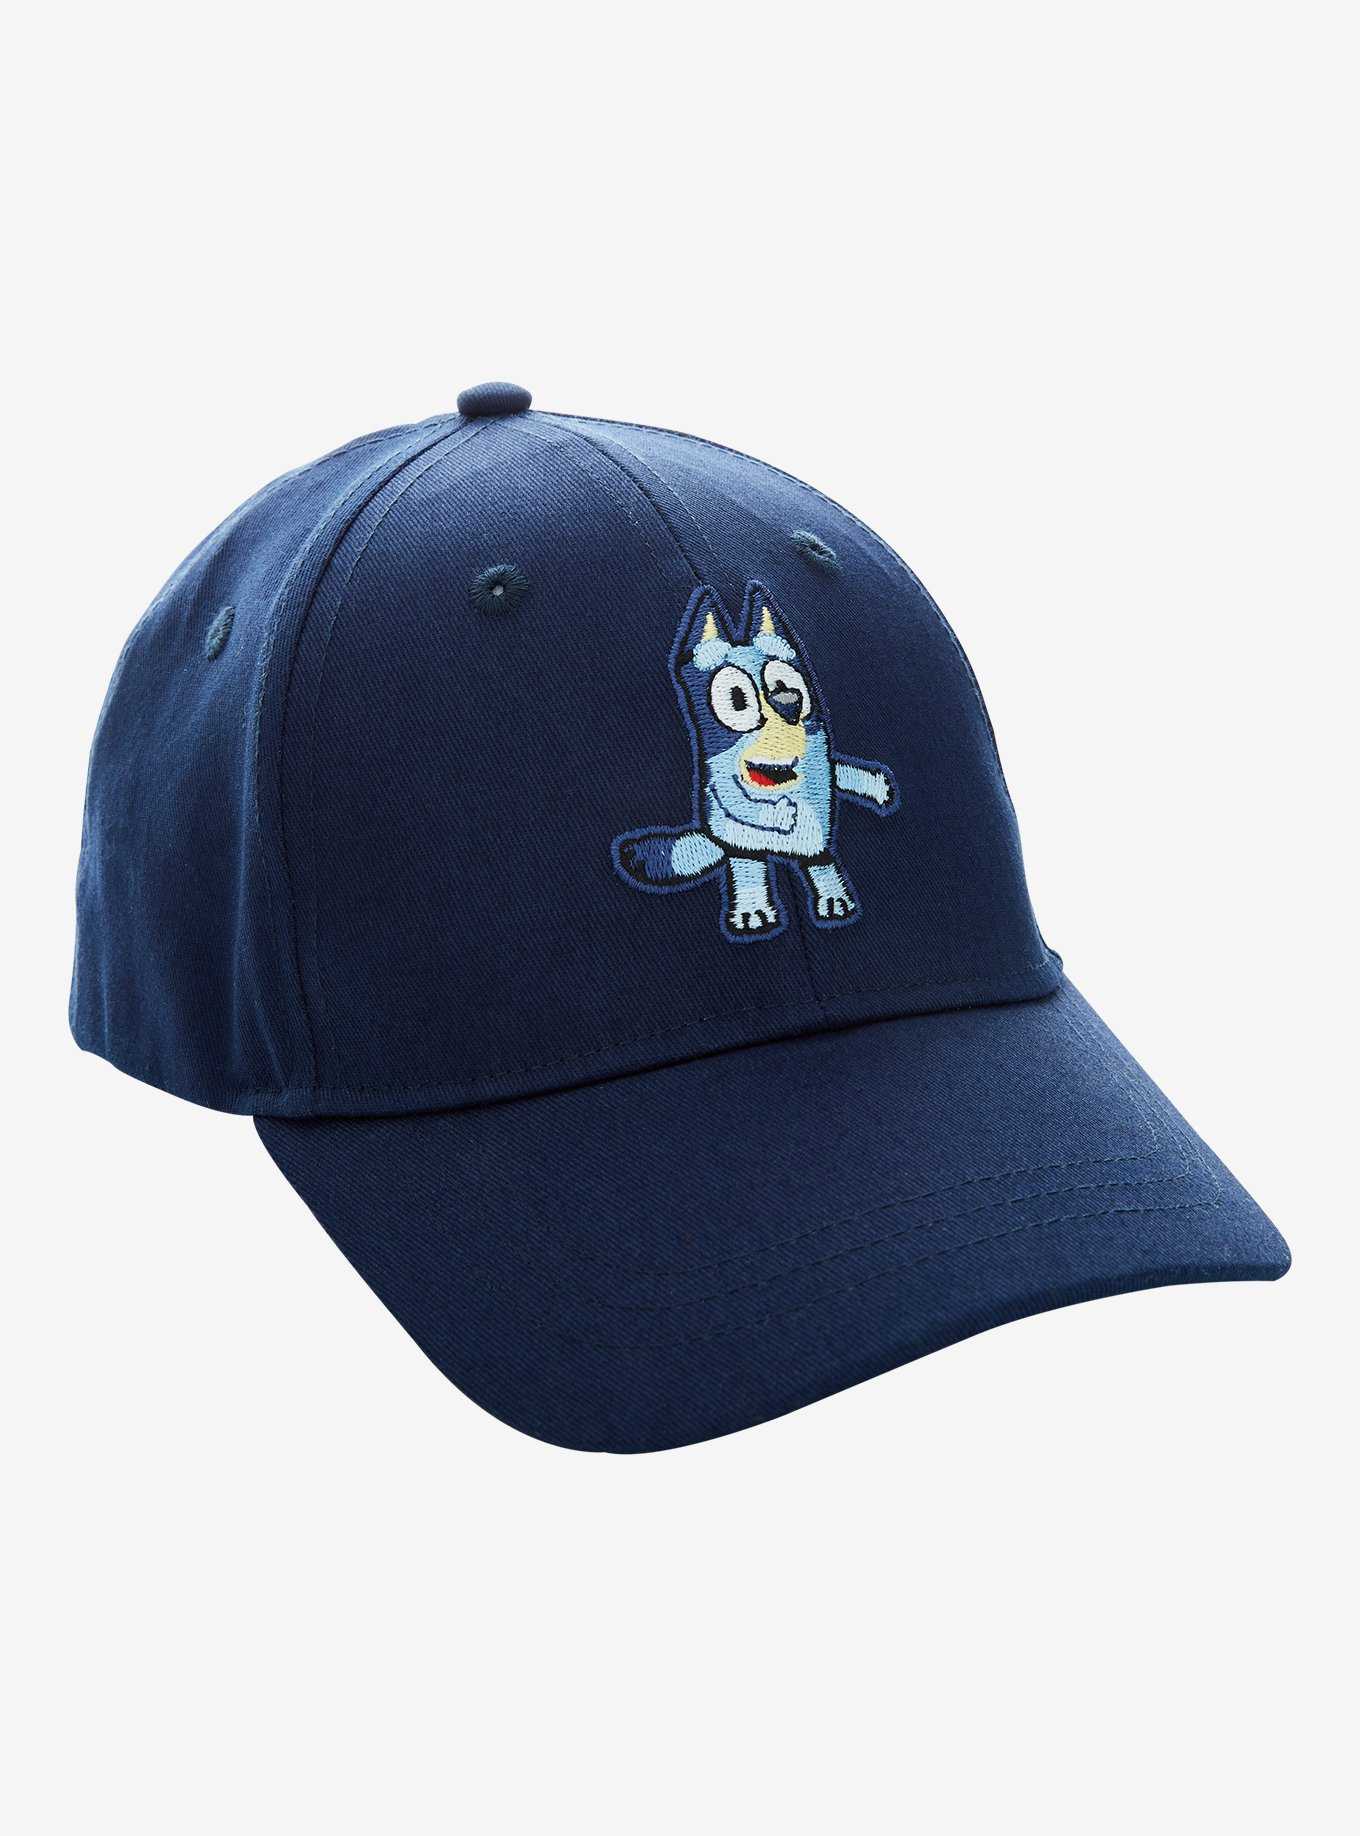 Cool Hats for Kids & Cute Kids Hats